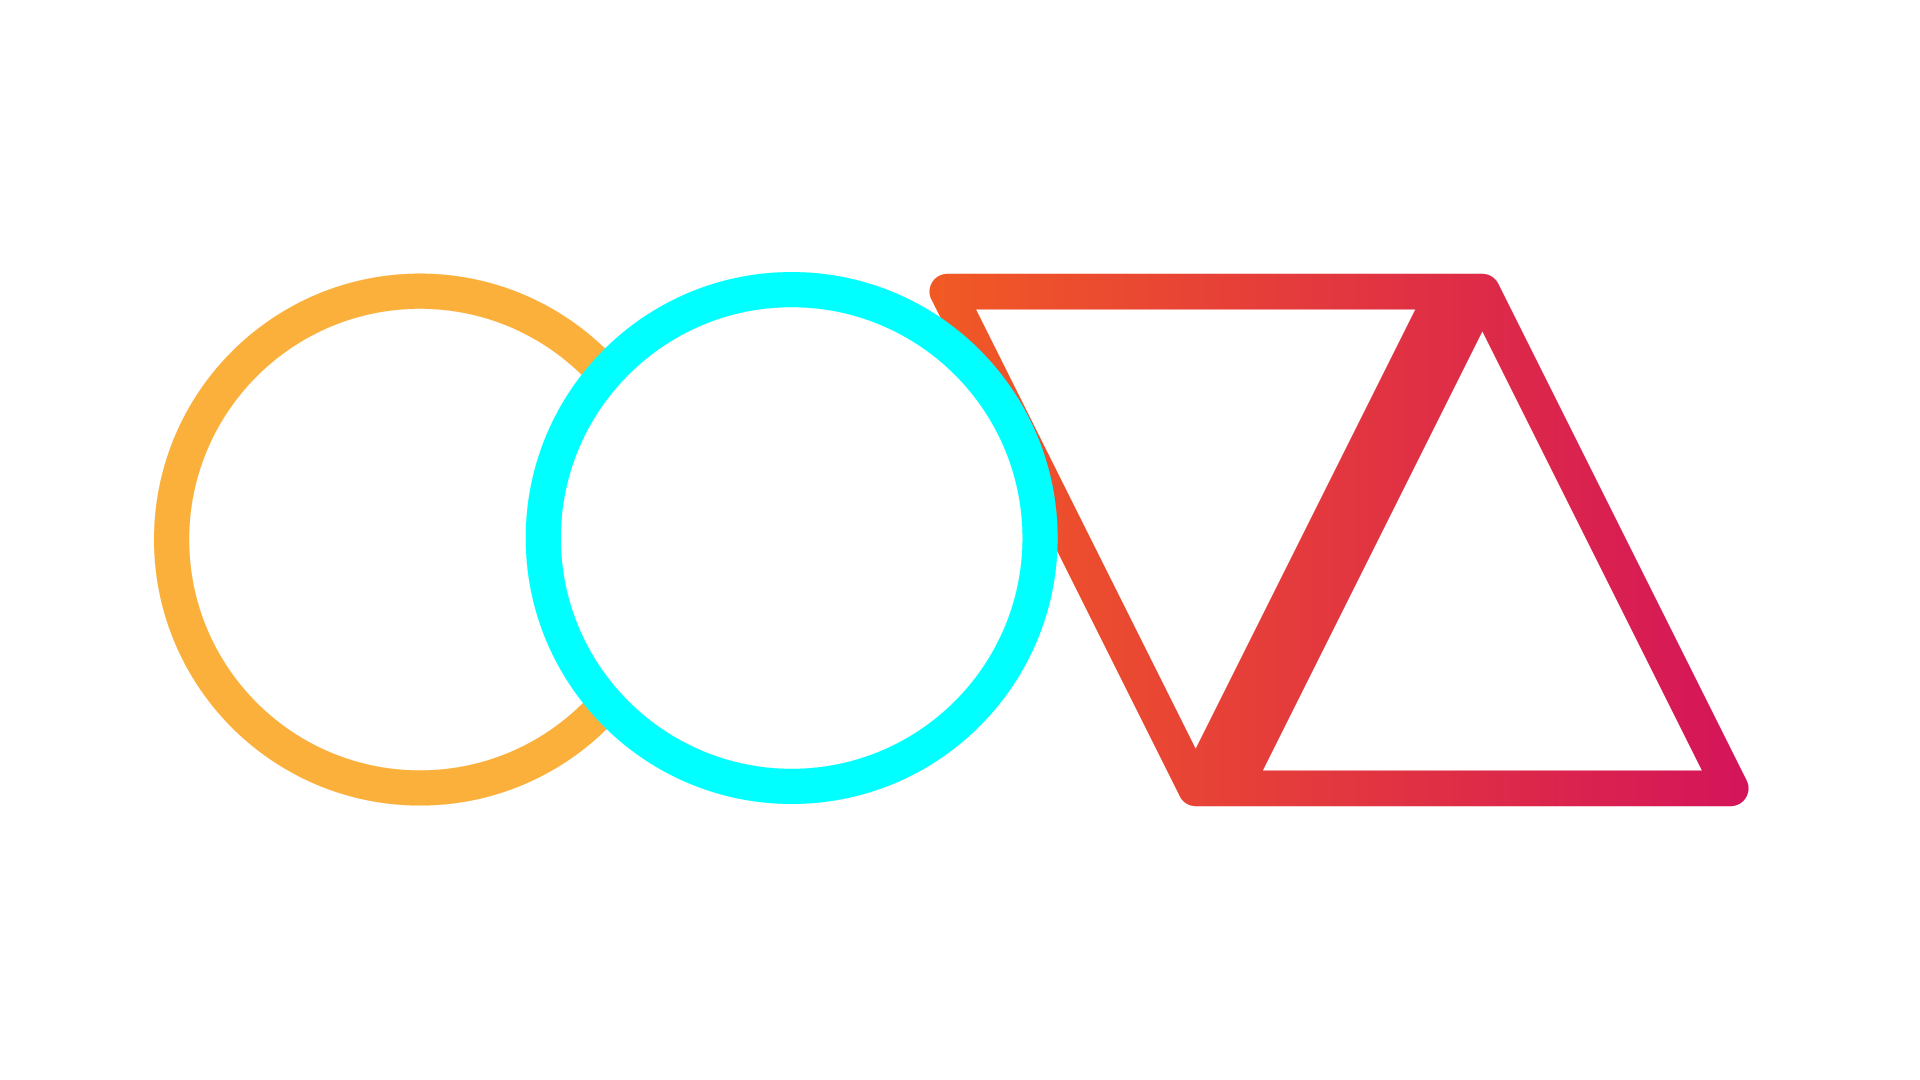 COVA – Colombia Videogames Association